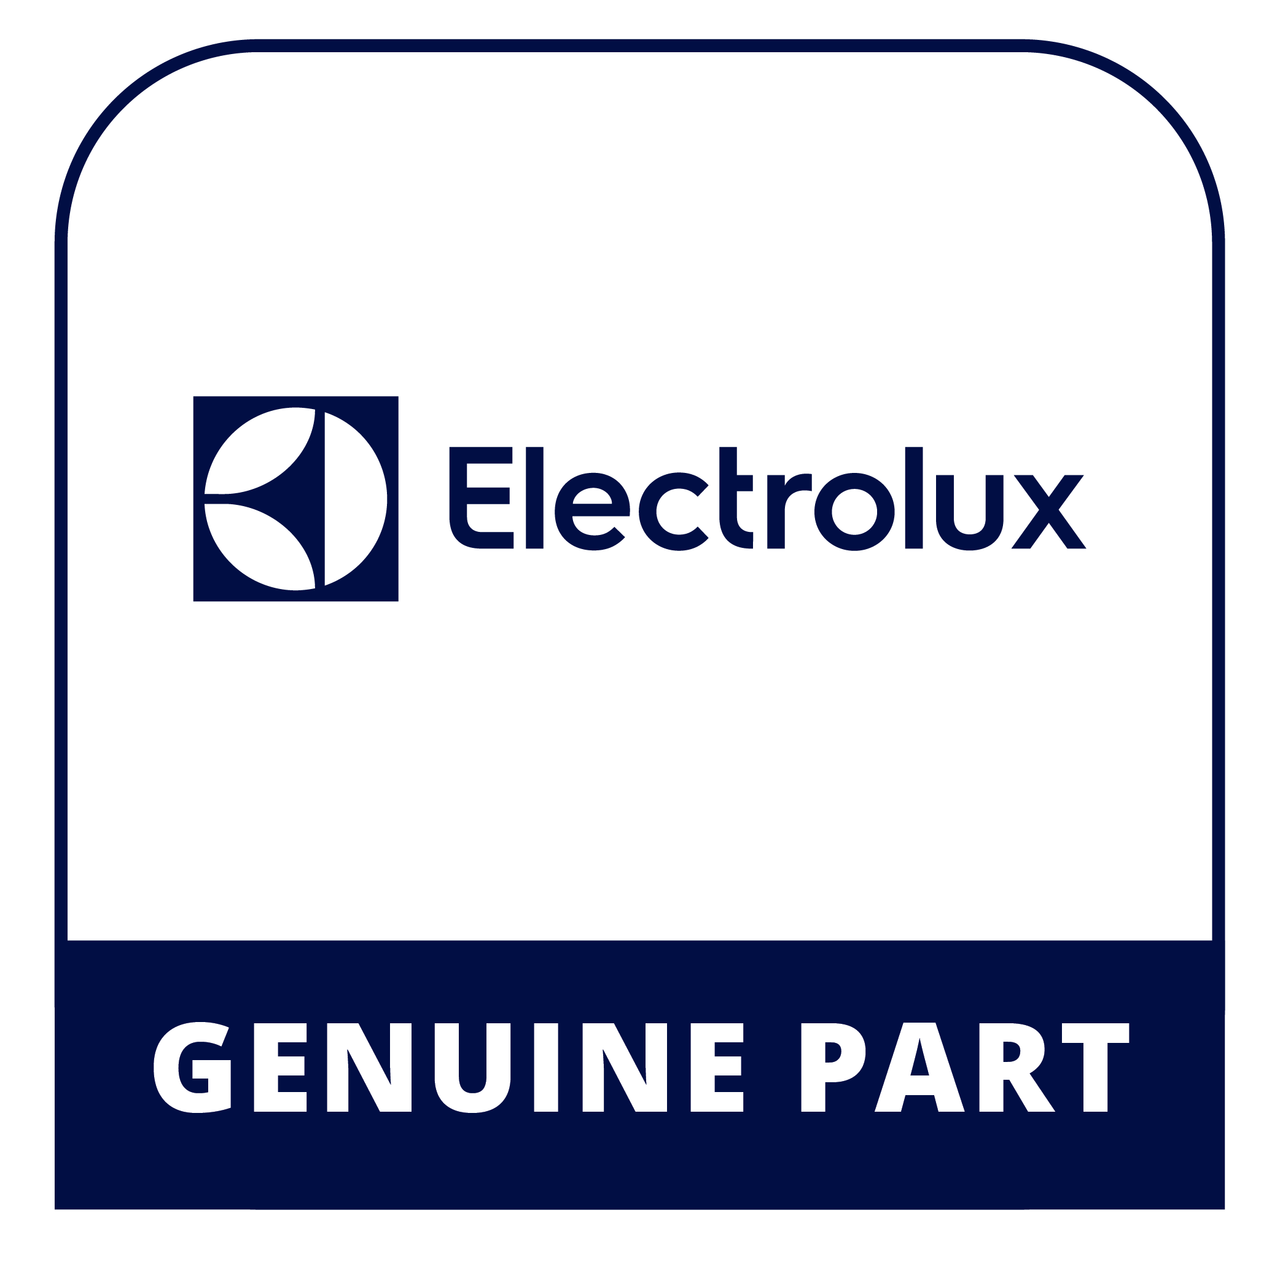 Frigidaire - Electrolux 5304491603 Cushion - Genuine Electrolux Part